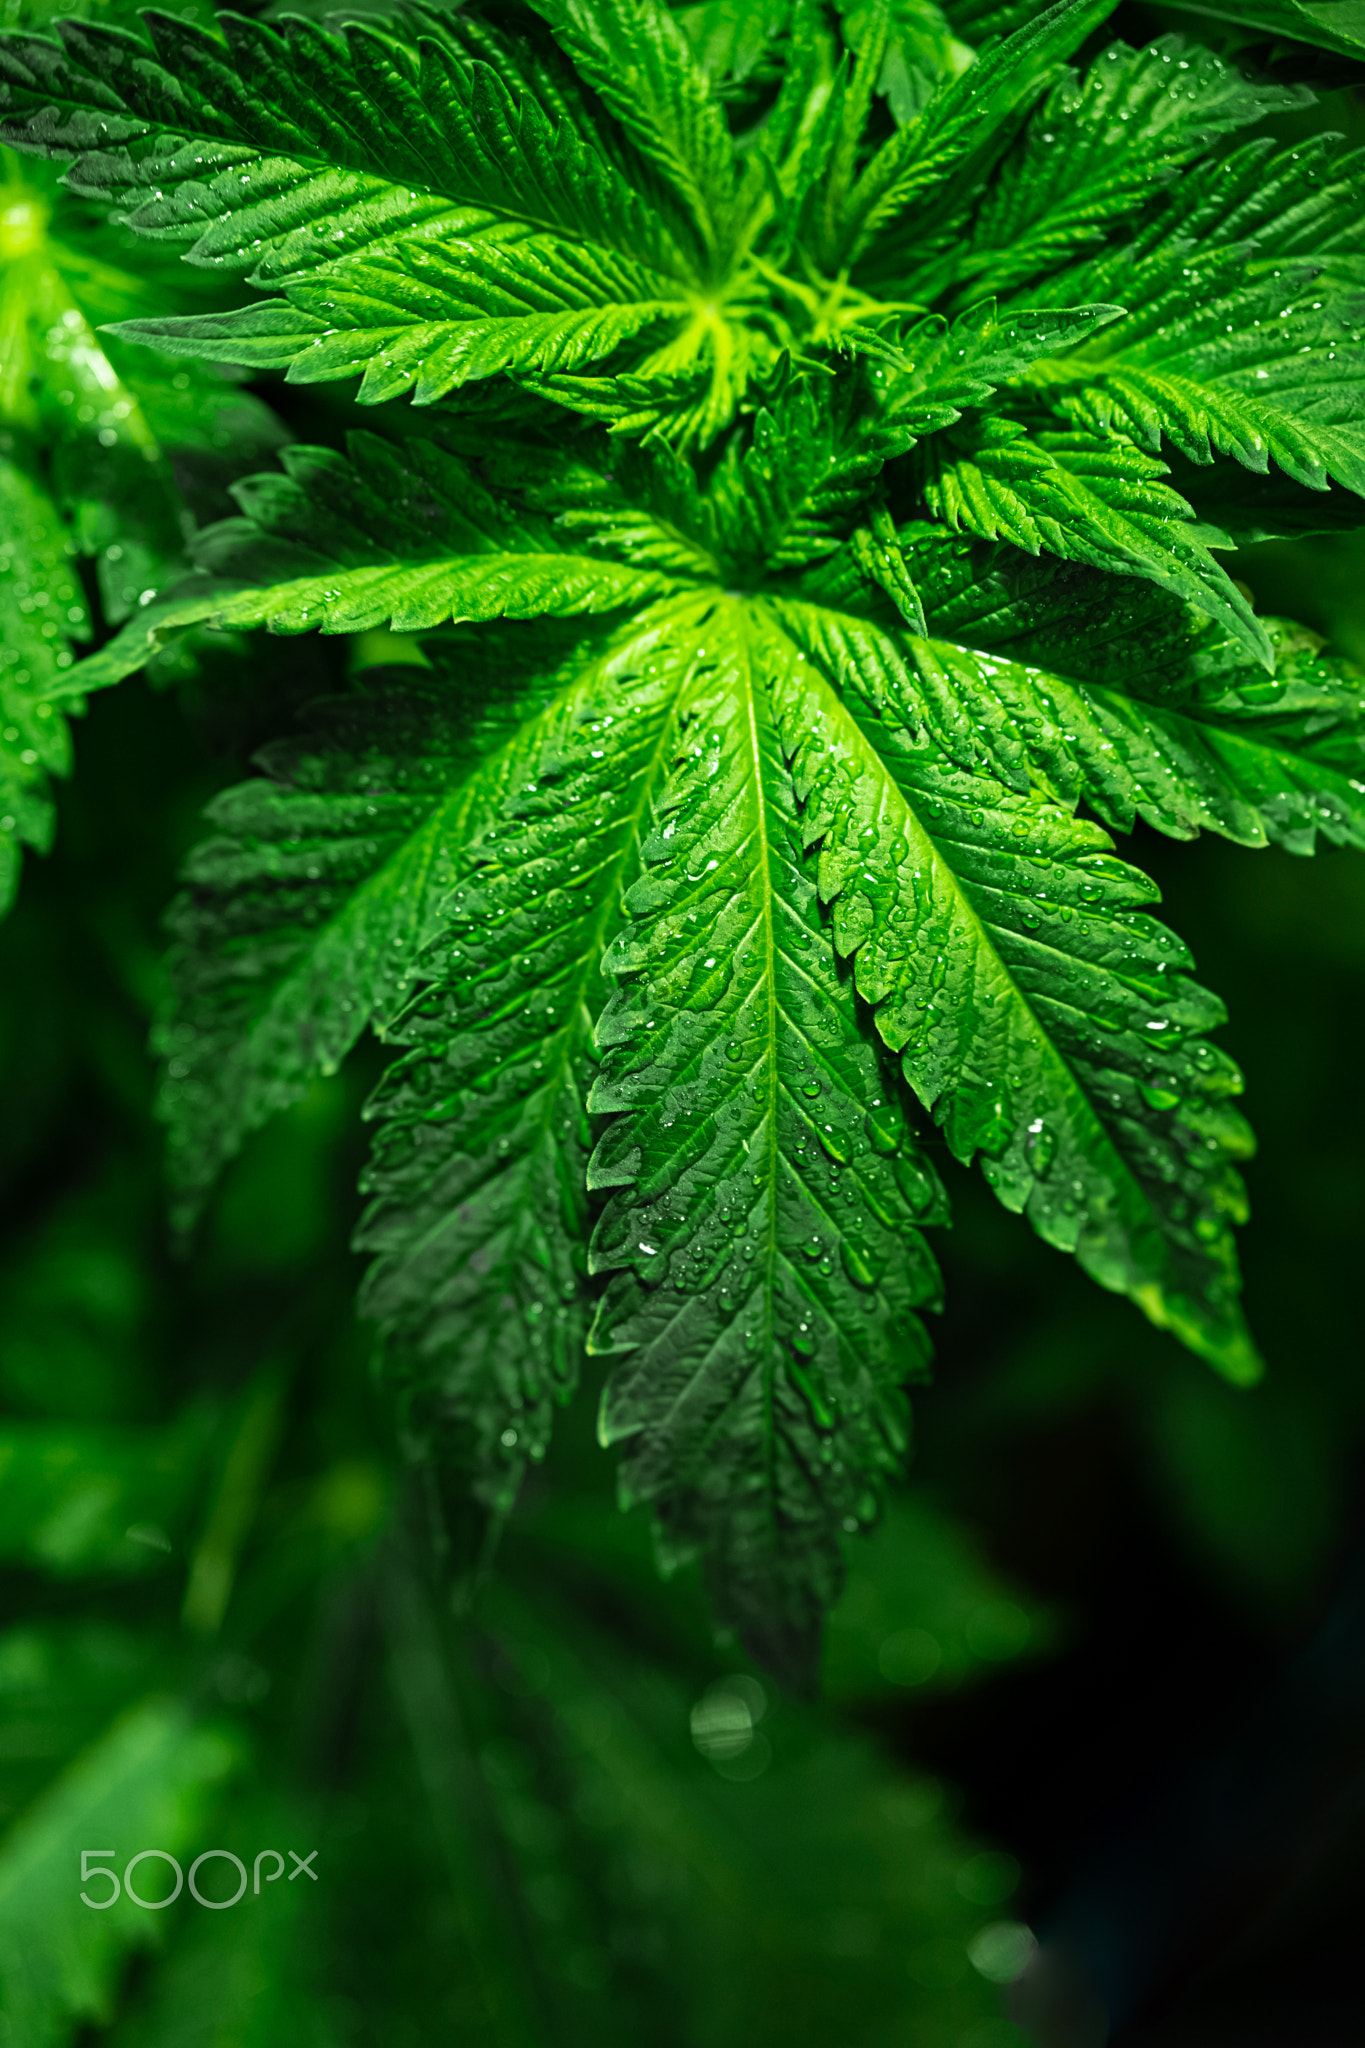 Water Droplets on the marijuana leaves.